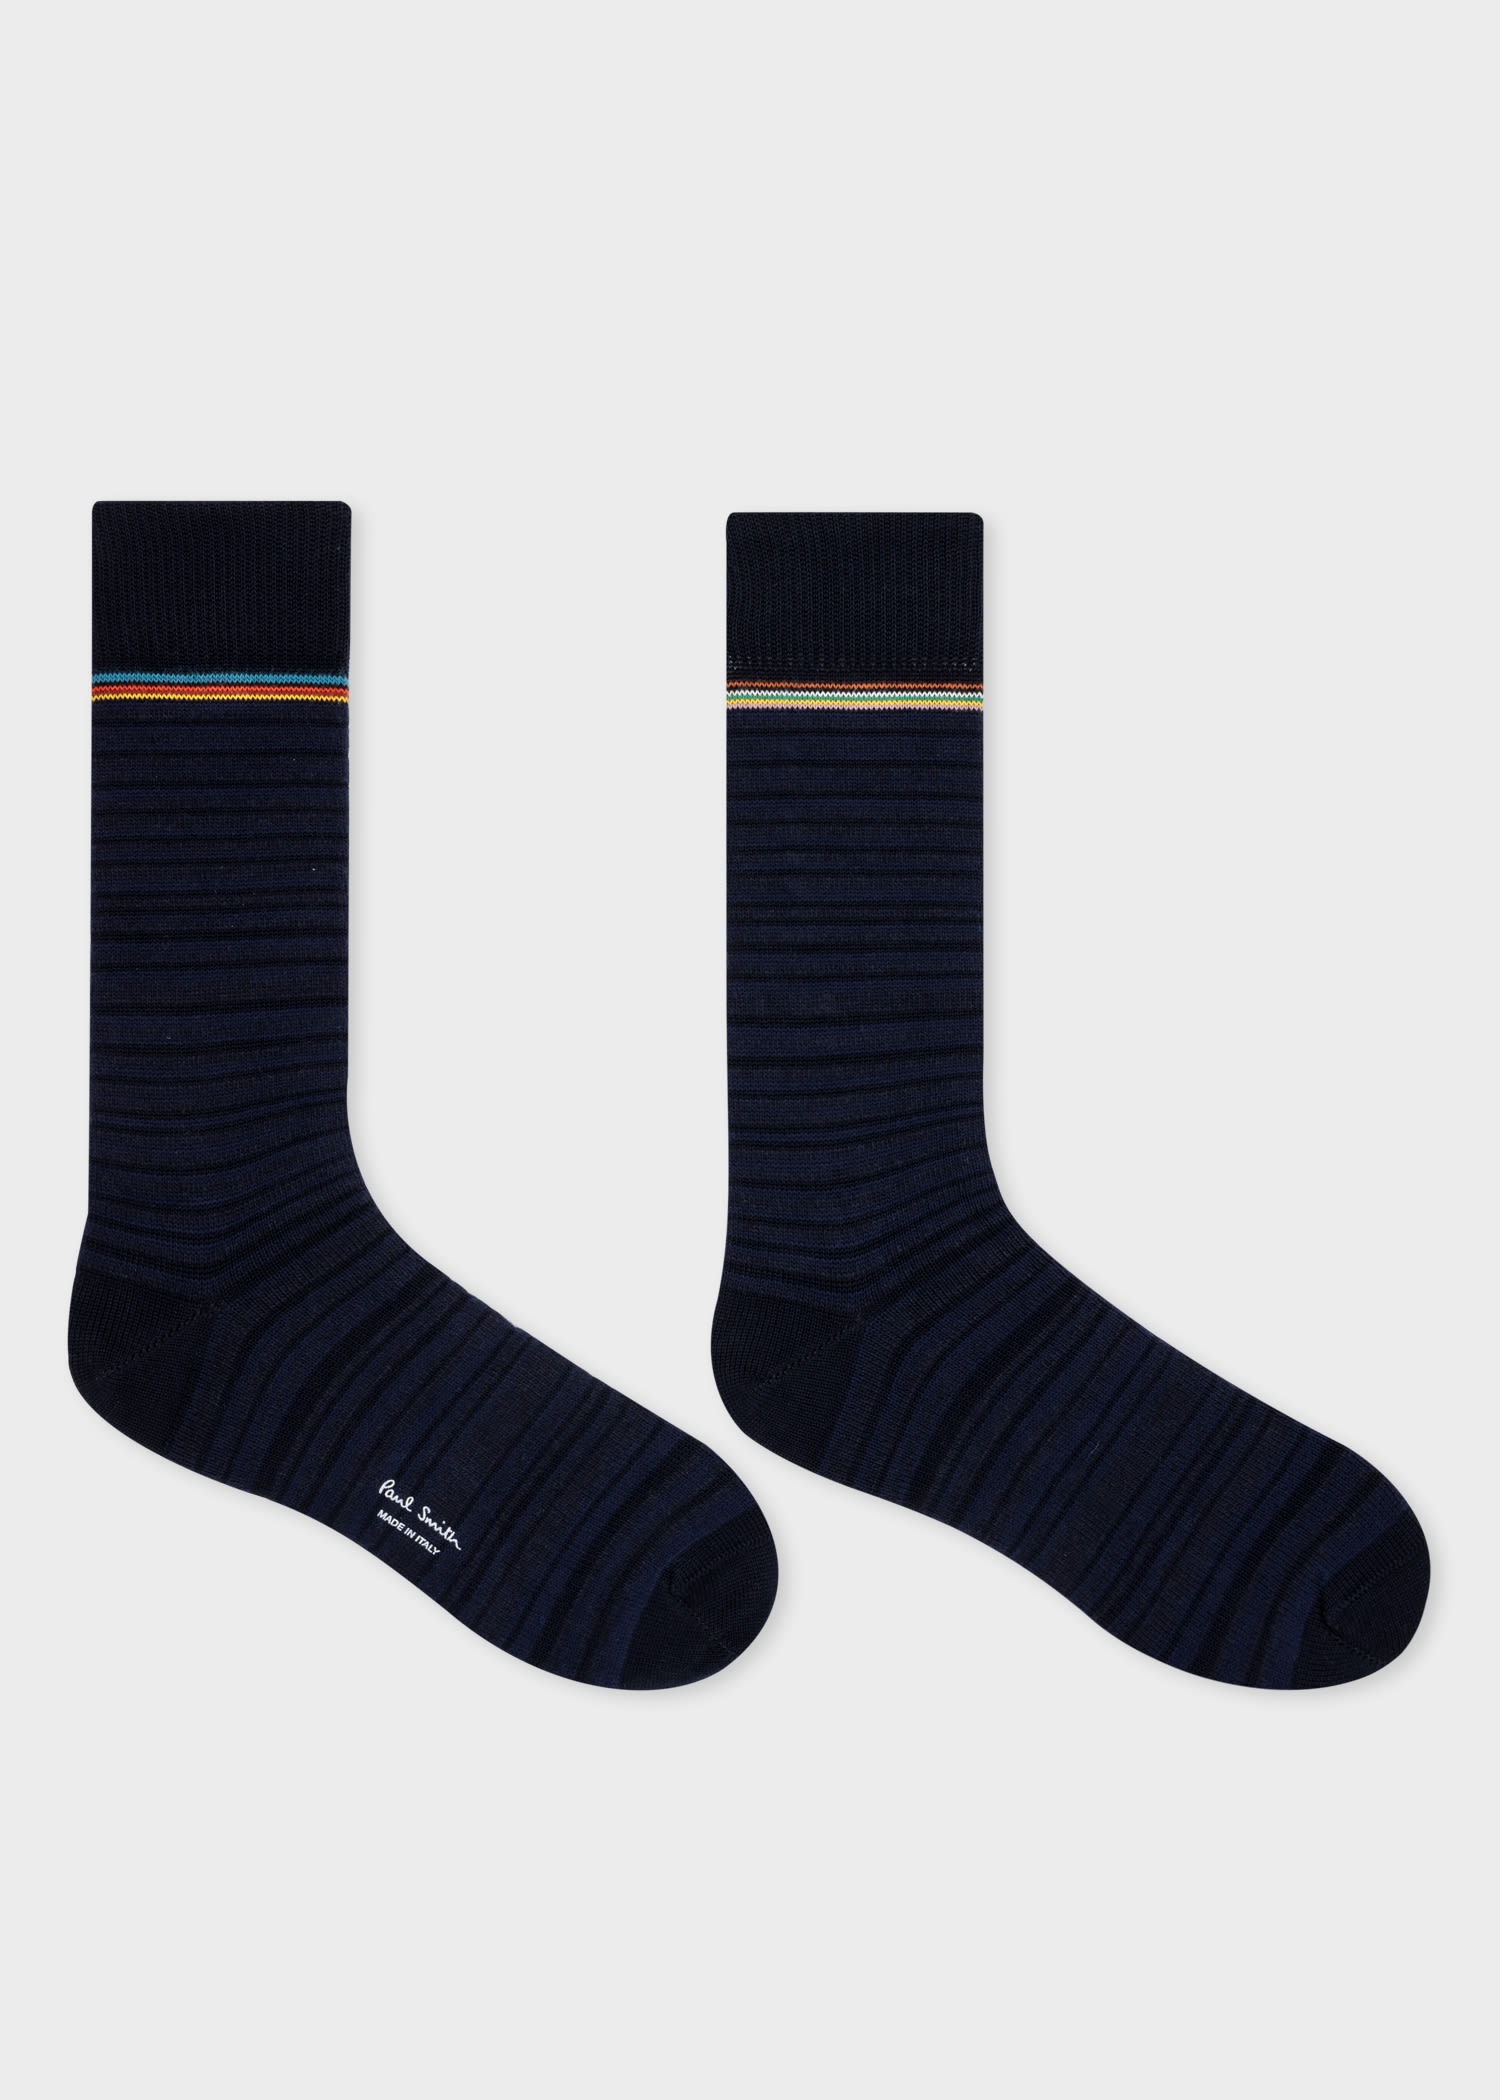 'Shadow Stripe' Socks & Card Holder Gift Set - 4